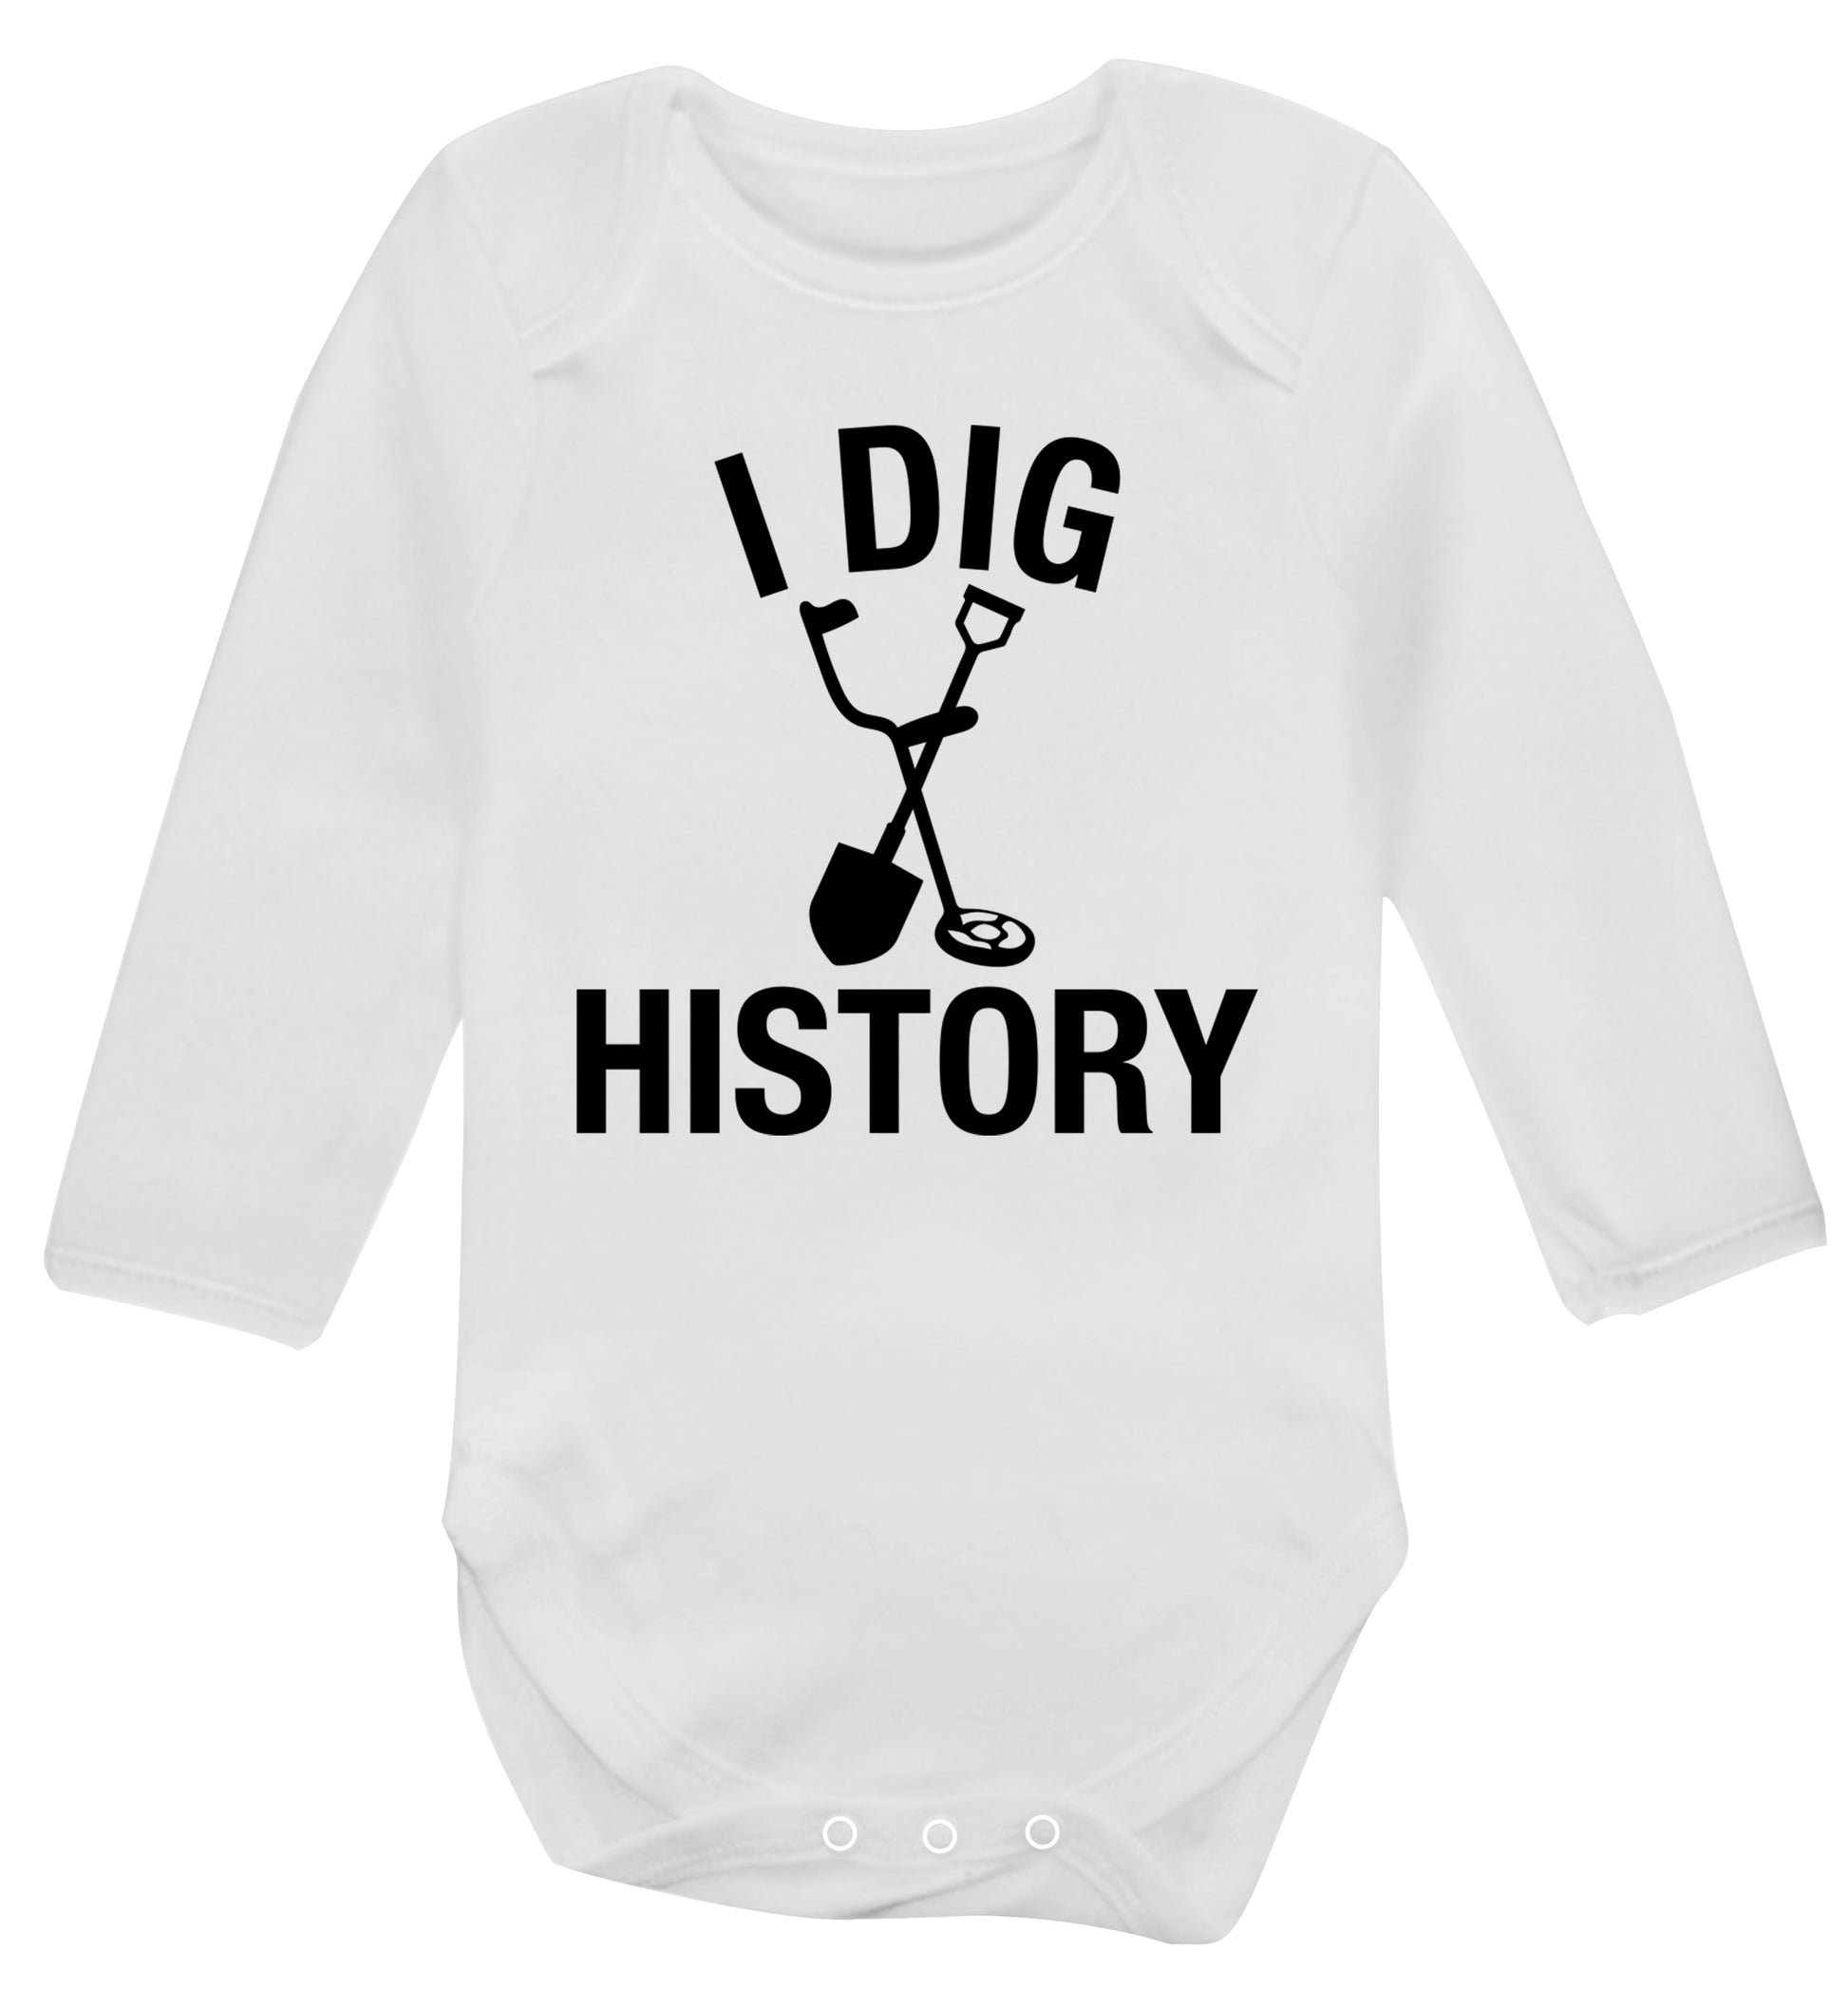 I dig history Baby Vest long sleeved white 6-12 months